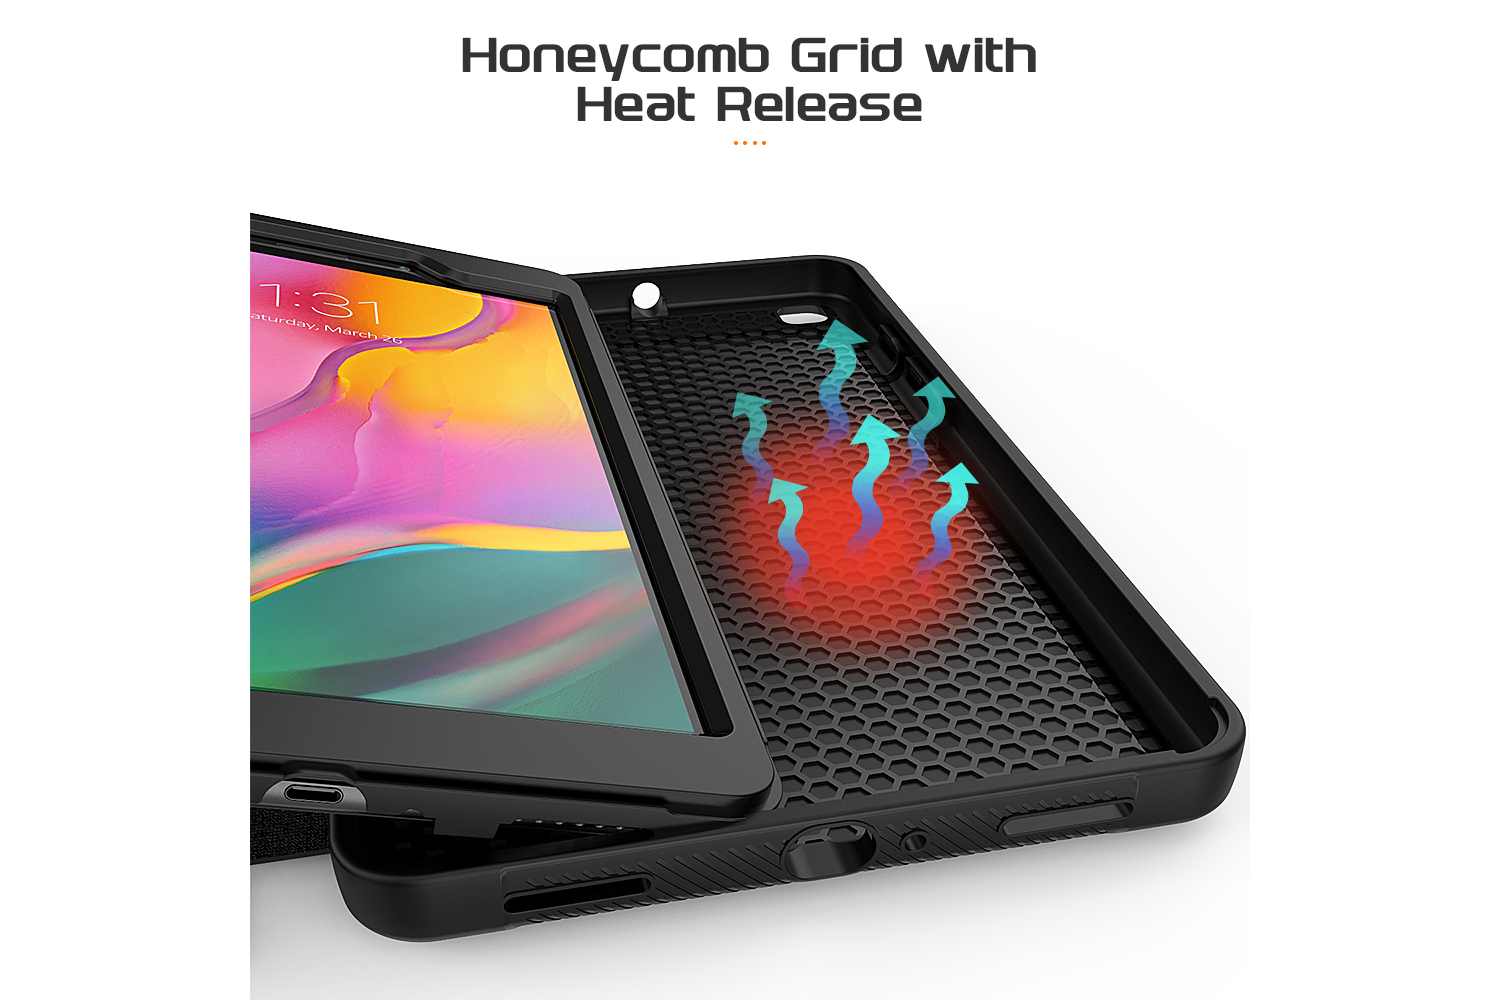 Imperial kolf Zwaaien Samsung tablet hoes 8 INCH | 3-lagen-bescherming - case | tablettotaal |  tablettotaal.nl